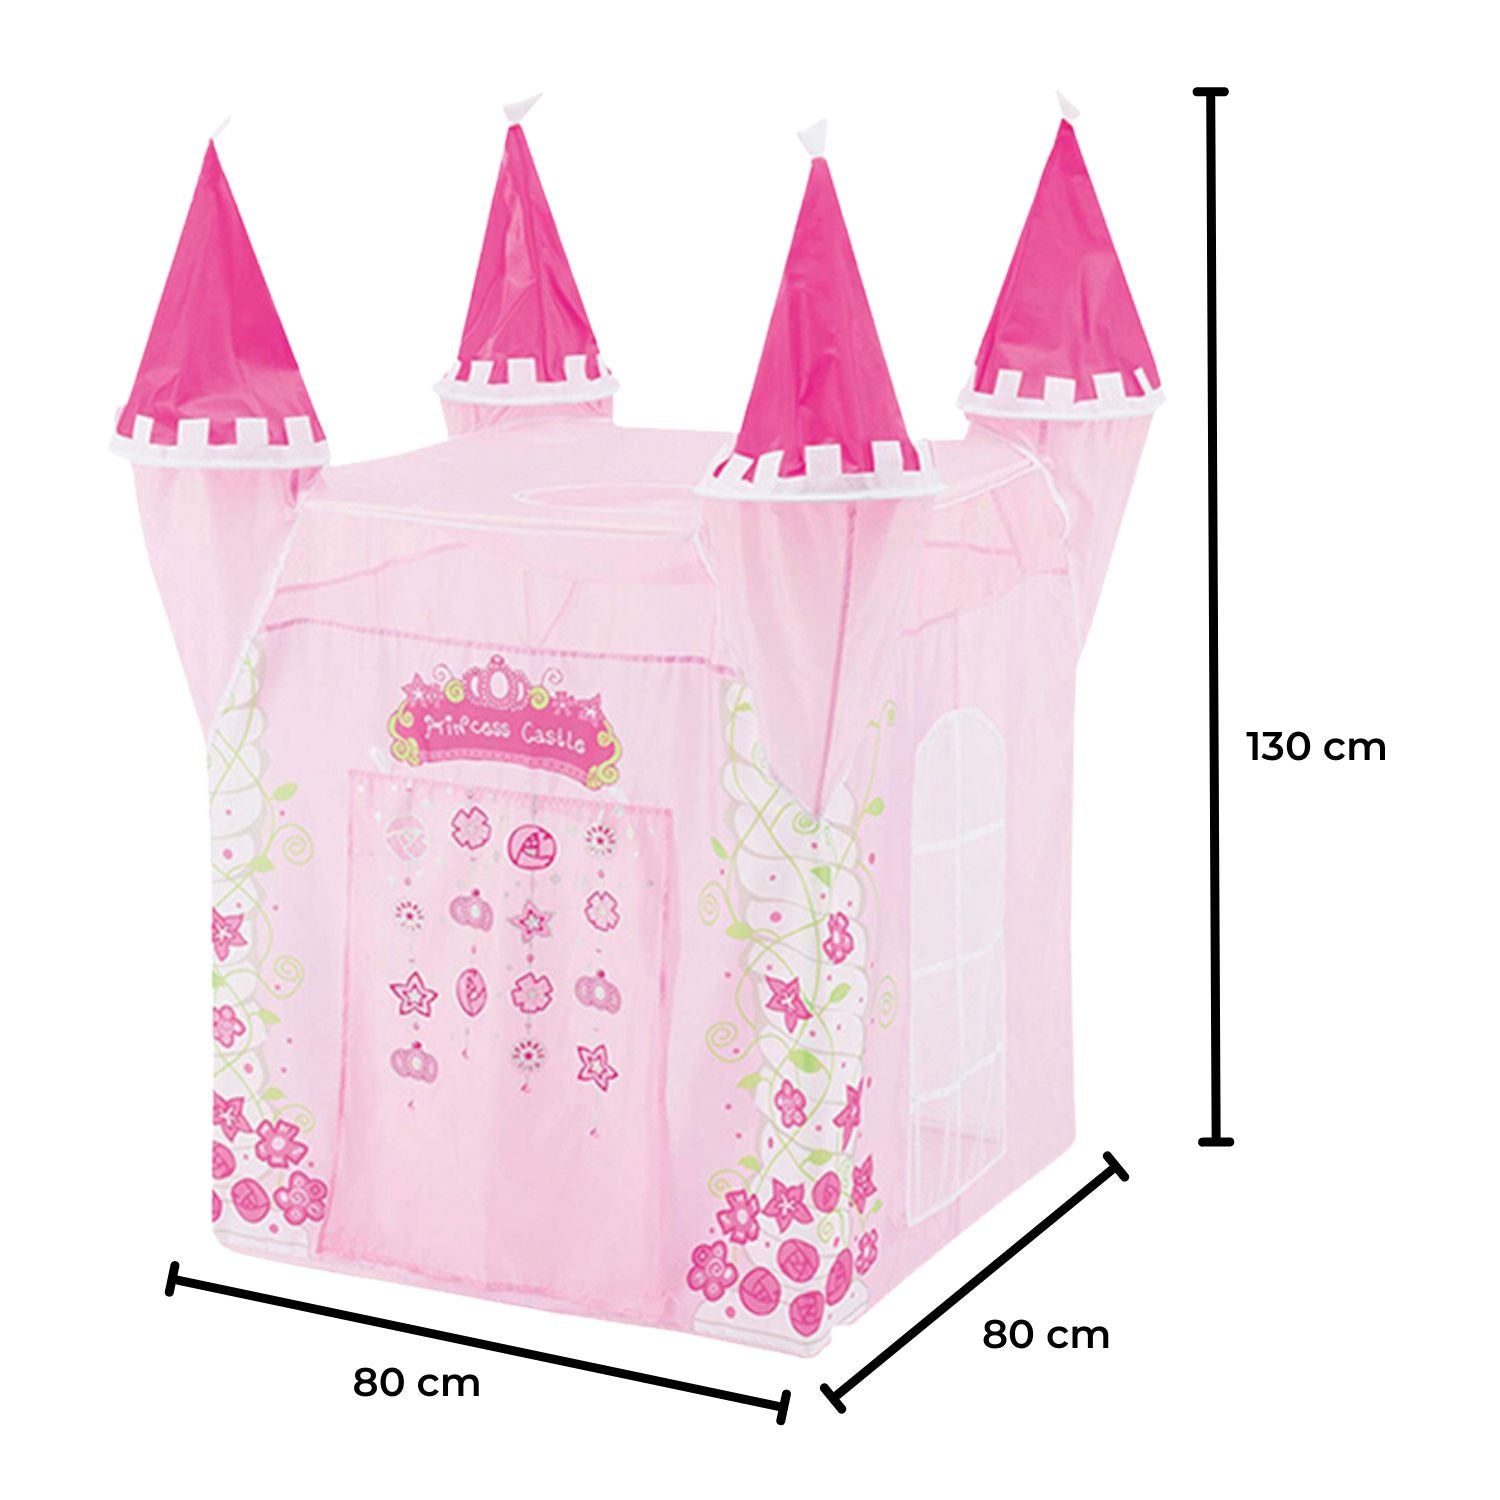 GOMINIMO Kids Princess Castle Tent (Pink)